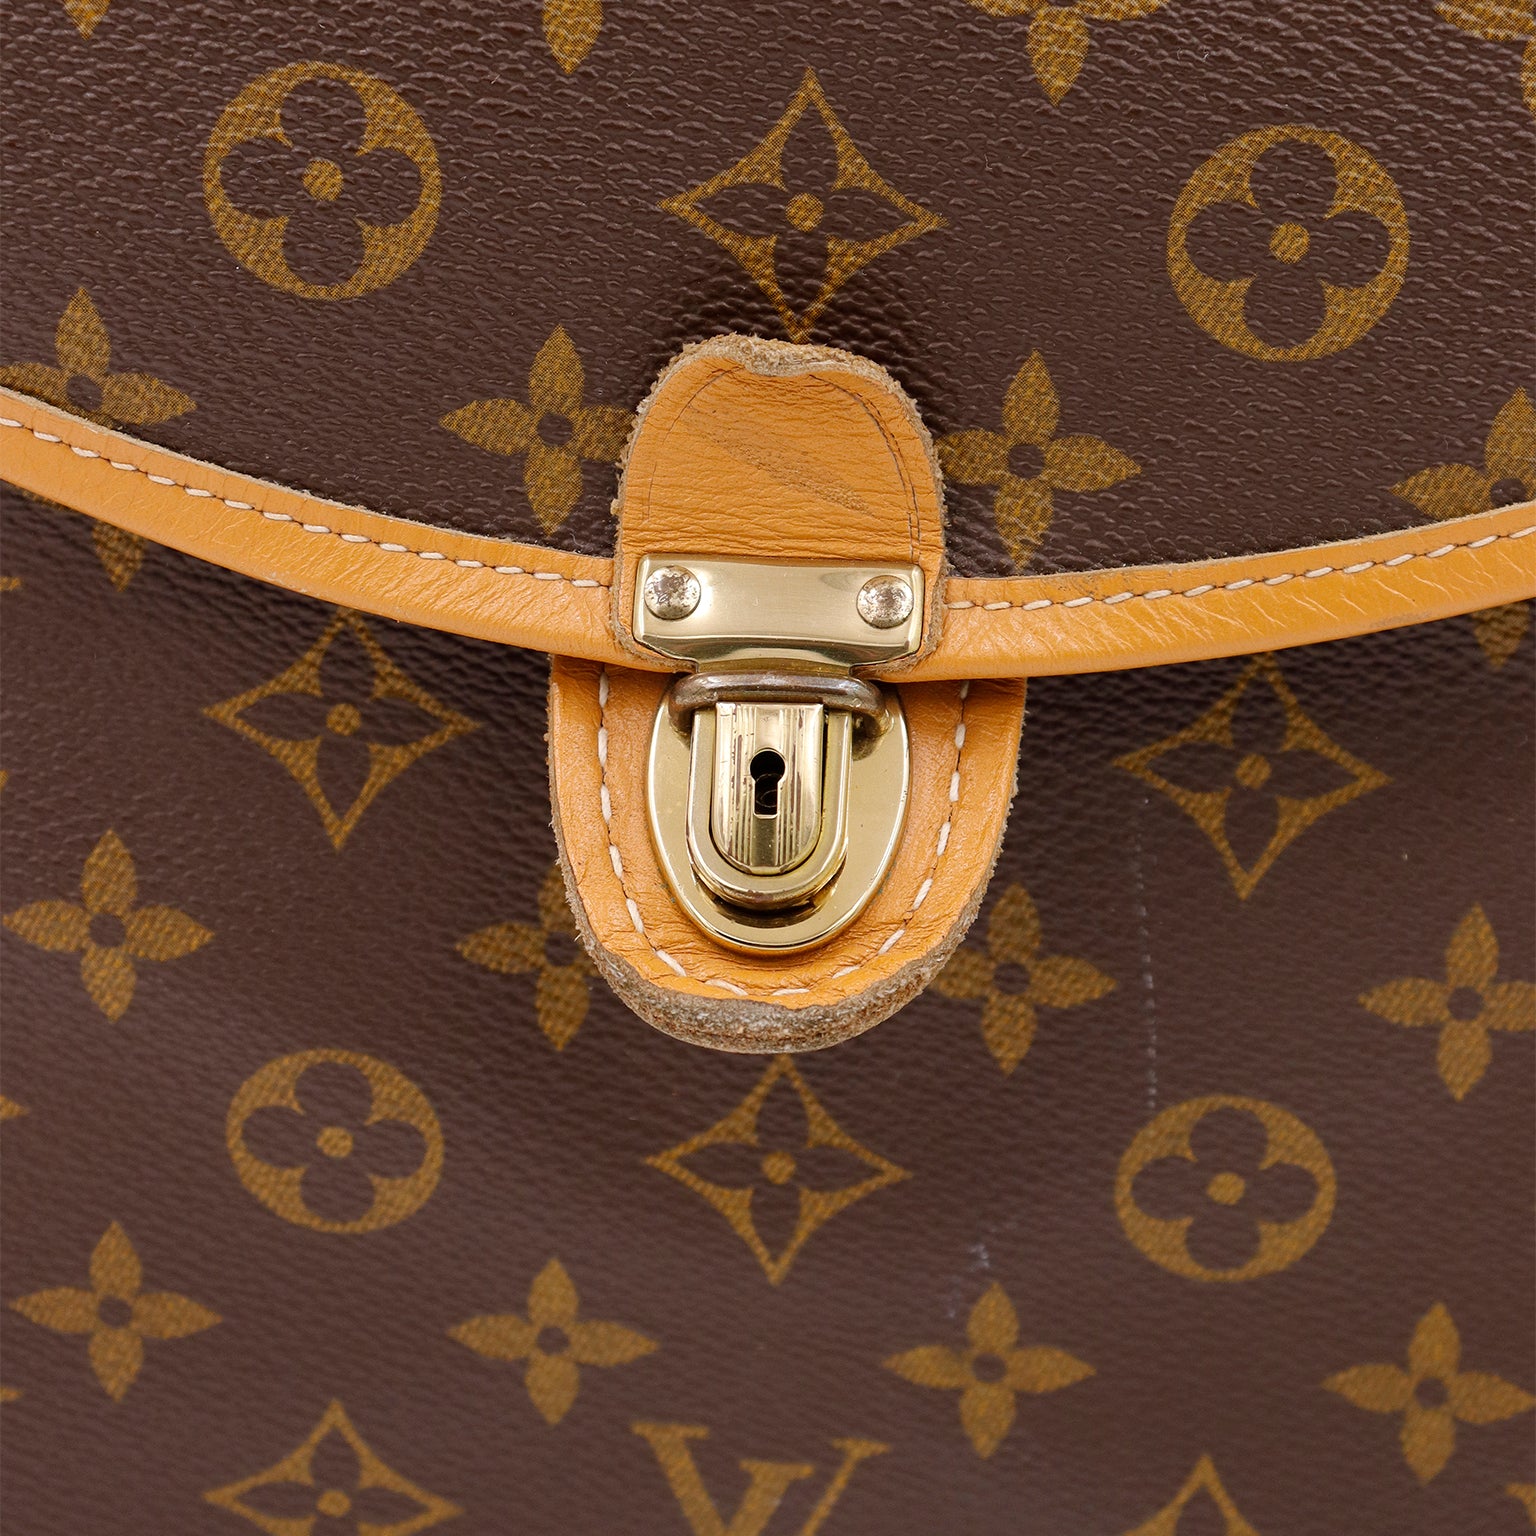 Louis Vuitton Vintage French Company Monogram Shoulder Bag